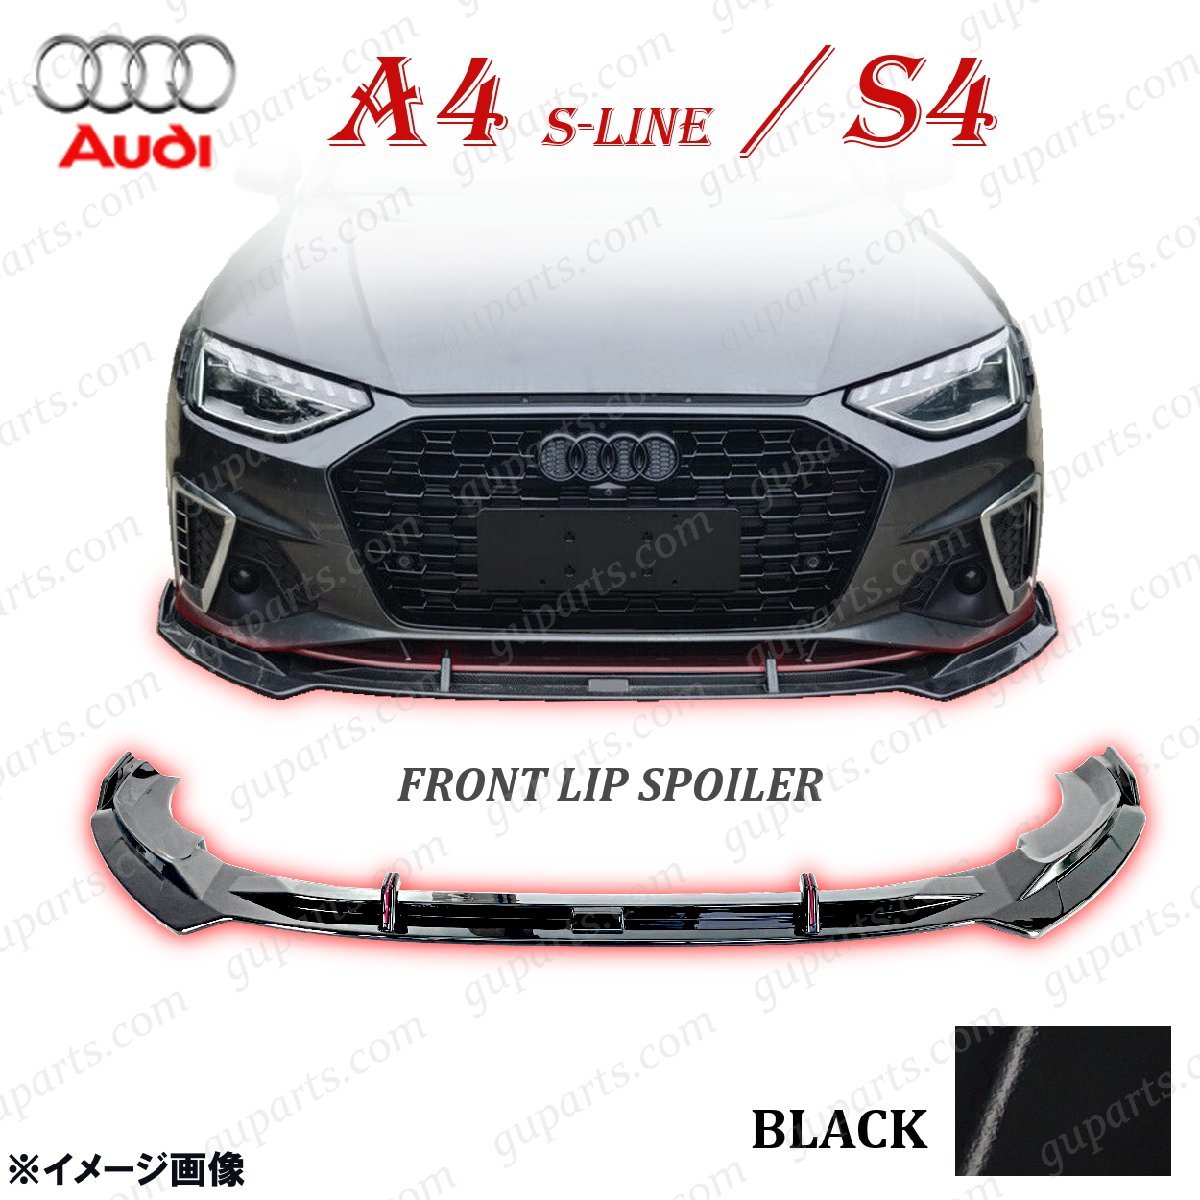  Audi A4 S line S4 2020~ lip spoiler black front bumper skirt 8WDEM 8WDDWF 8WDEZ 8WDETF 8WDEZ 8WDTPF 8WCWGF